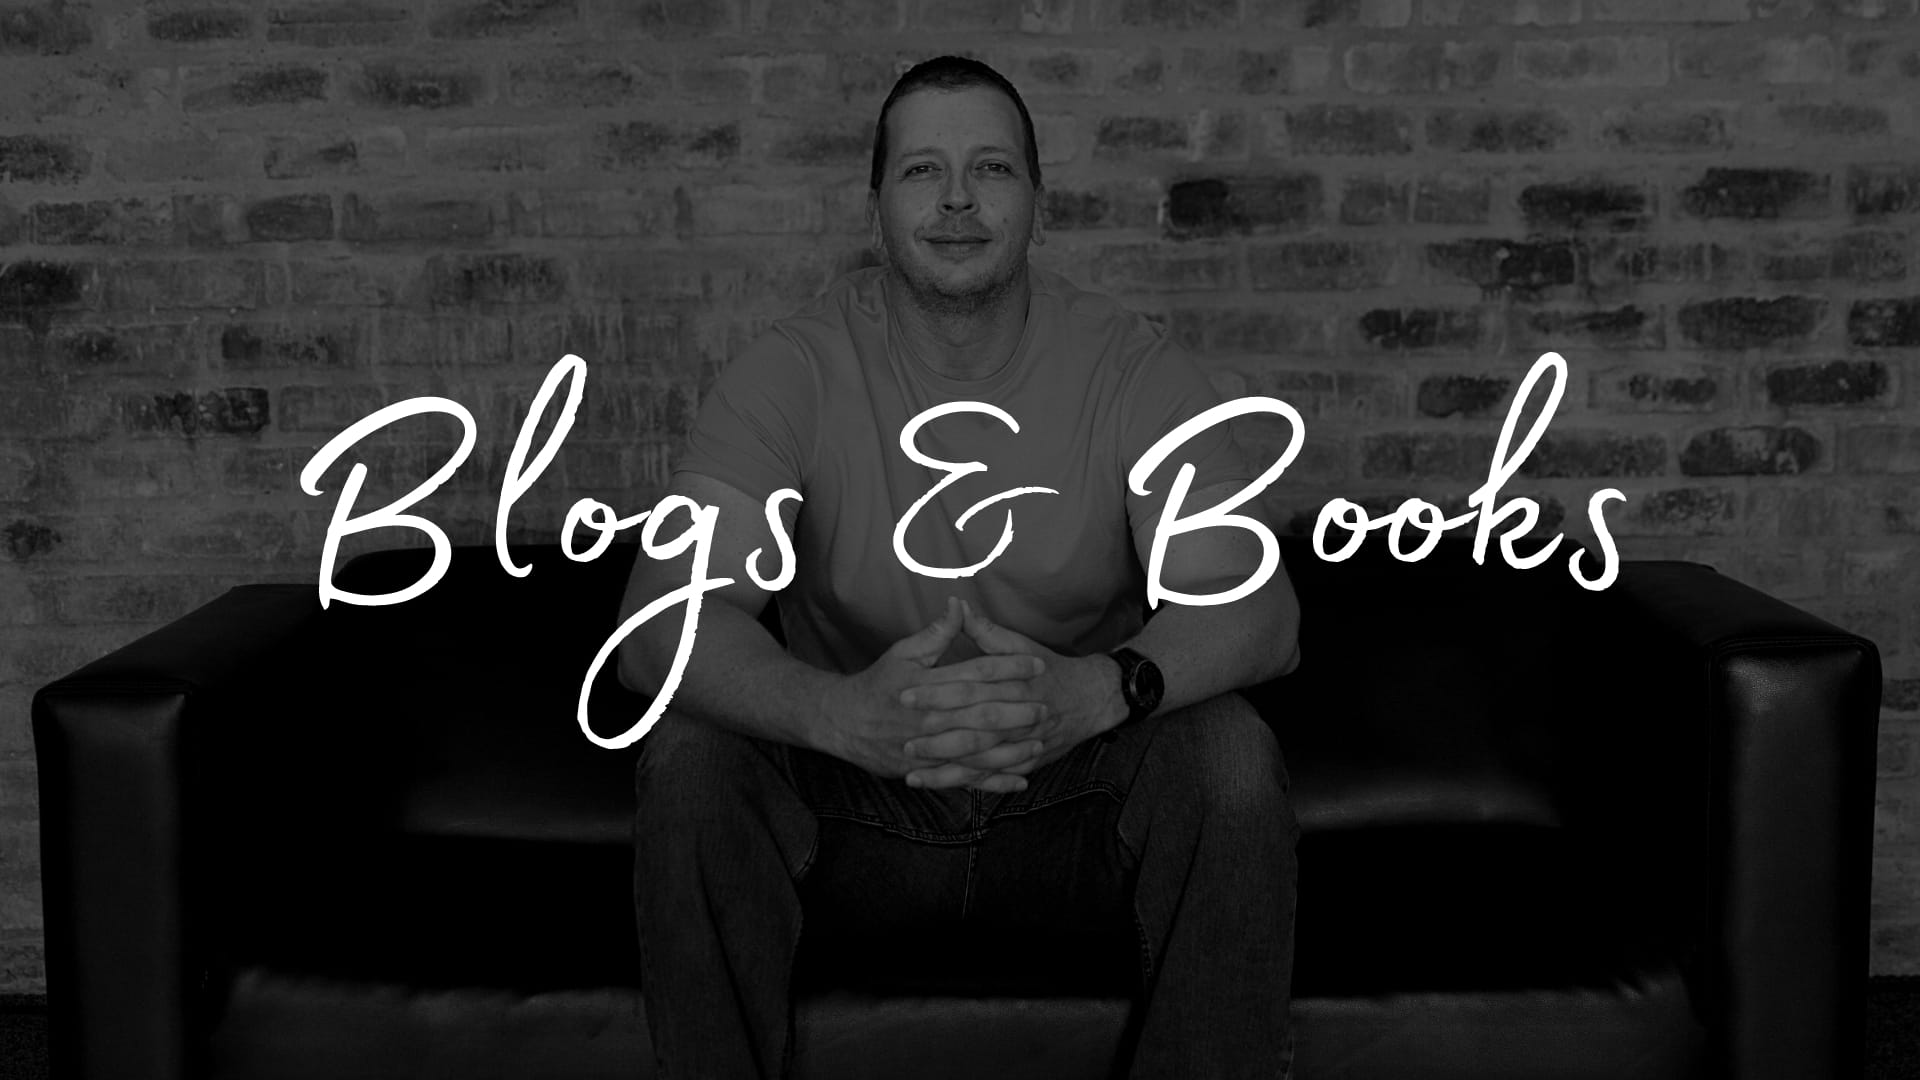 Schalk's Blogs & Books